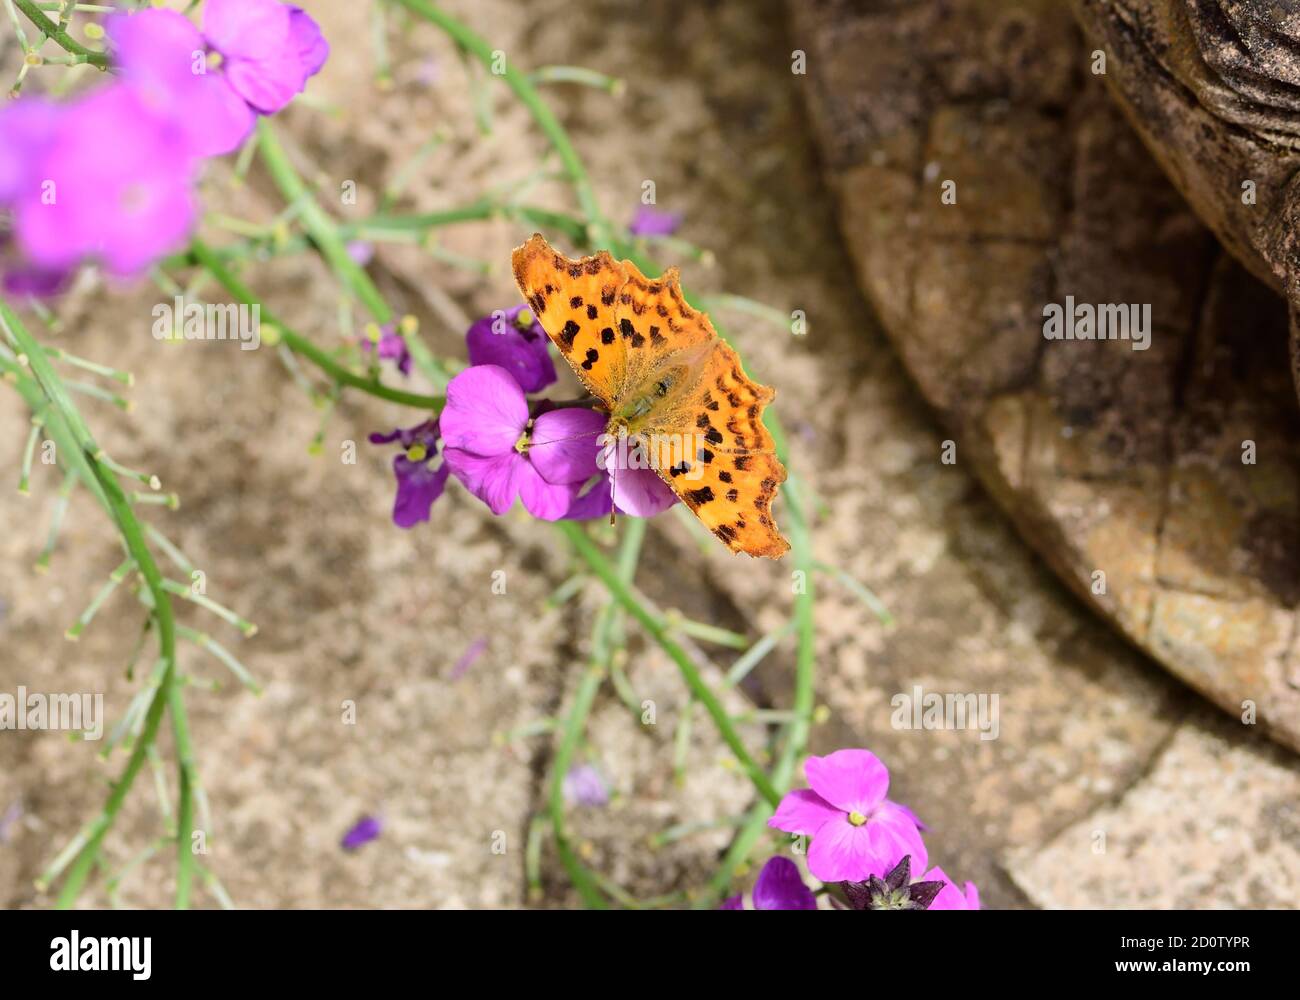 A Comma butterfly on an Erysimum flower. Stock Photo